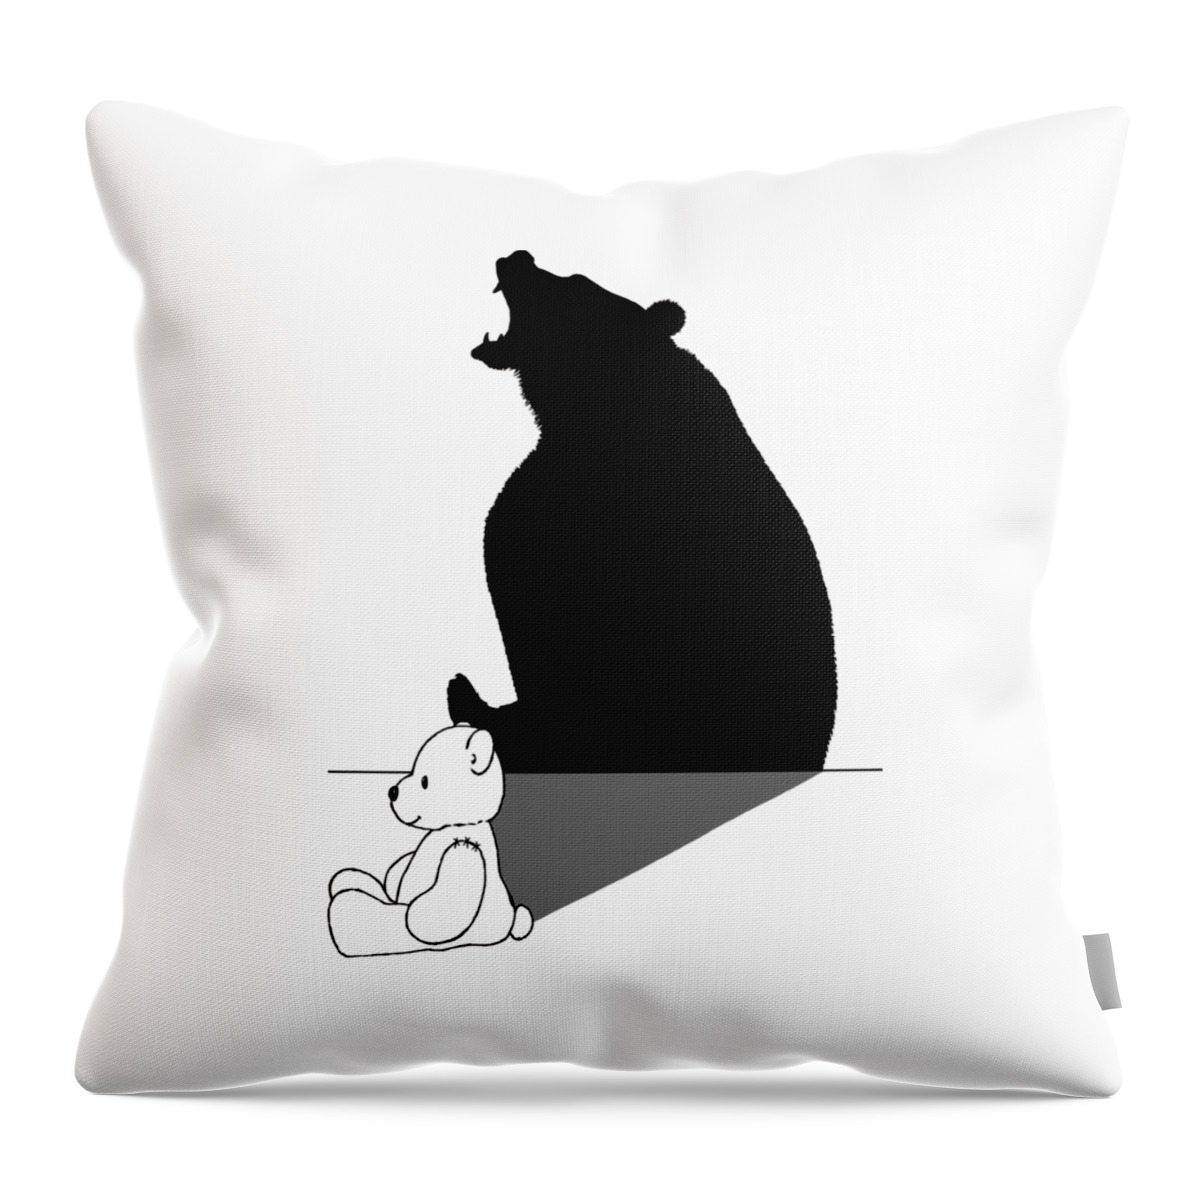 Teddybear Throw Pillow featuring the digital art Teddybear With Roaring Bear Shadow by Konni Jensen